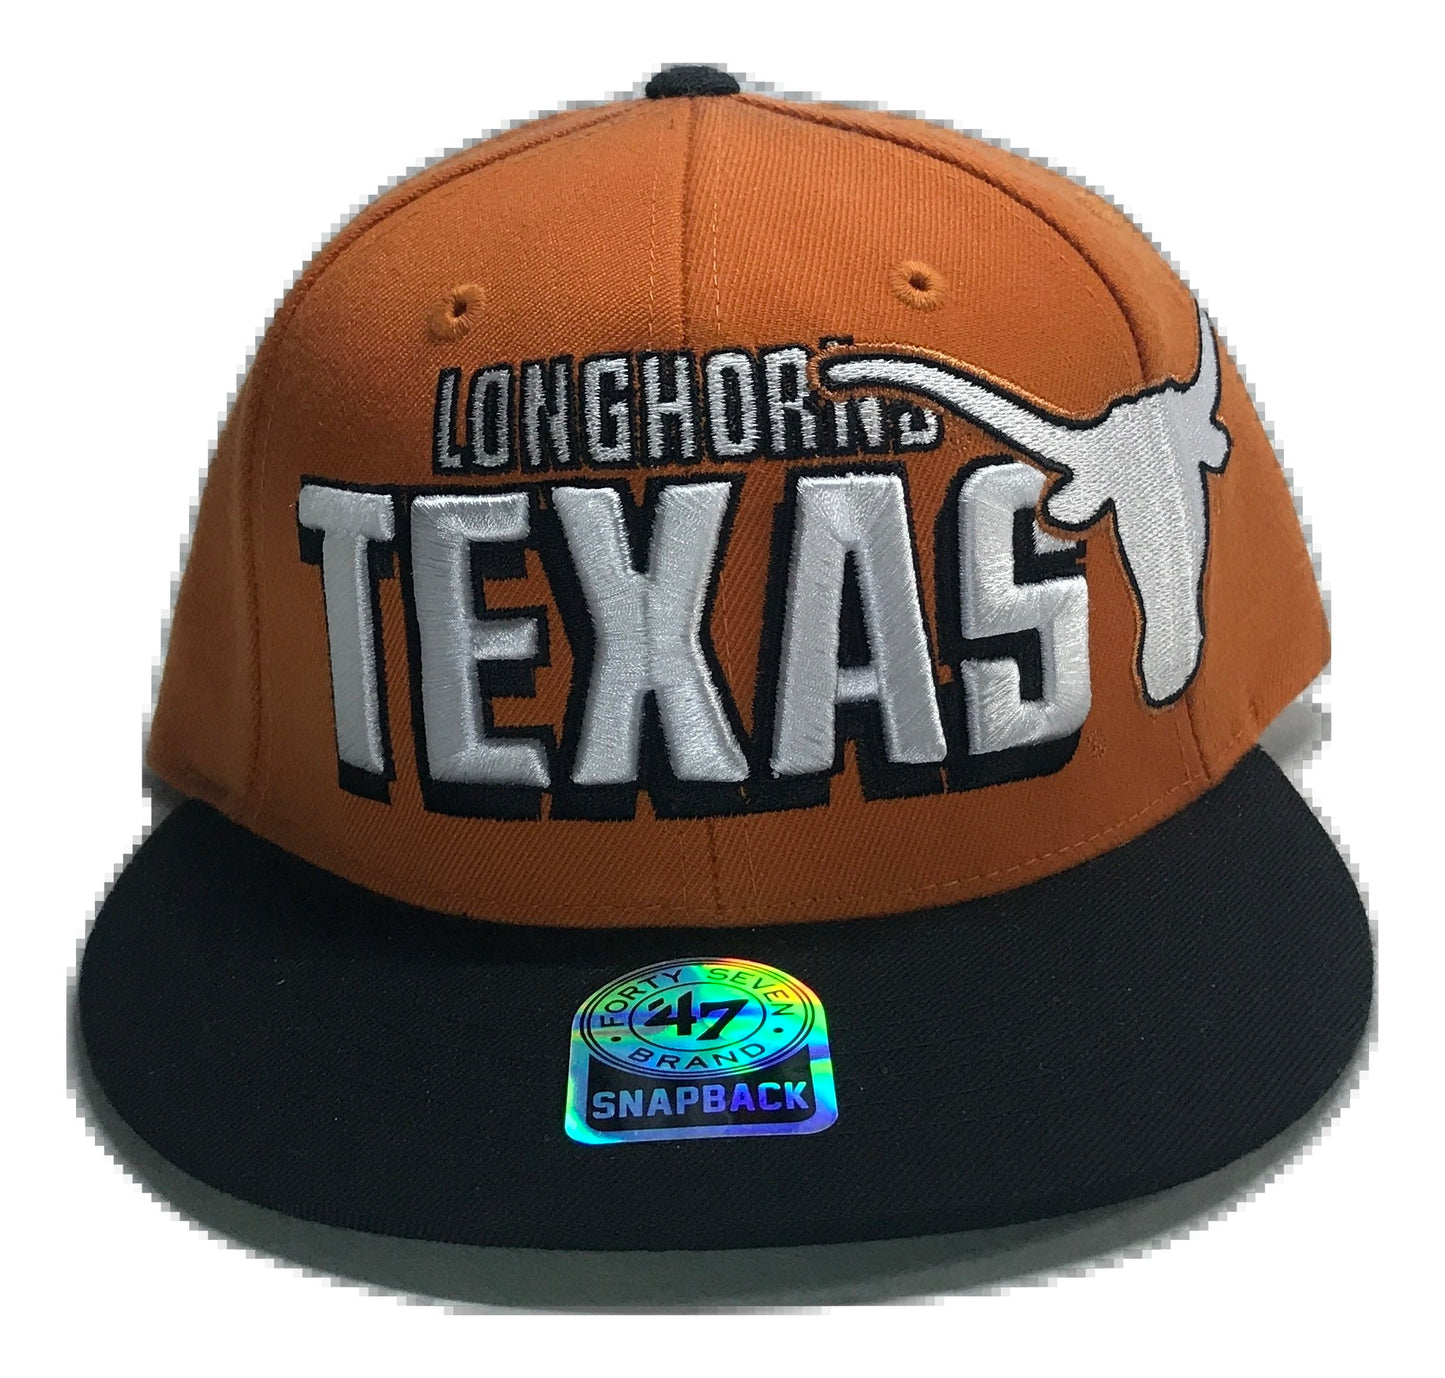 Texas Longhorns (Orange) Snapback